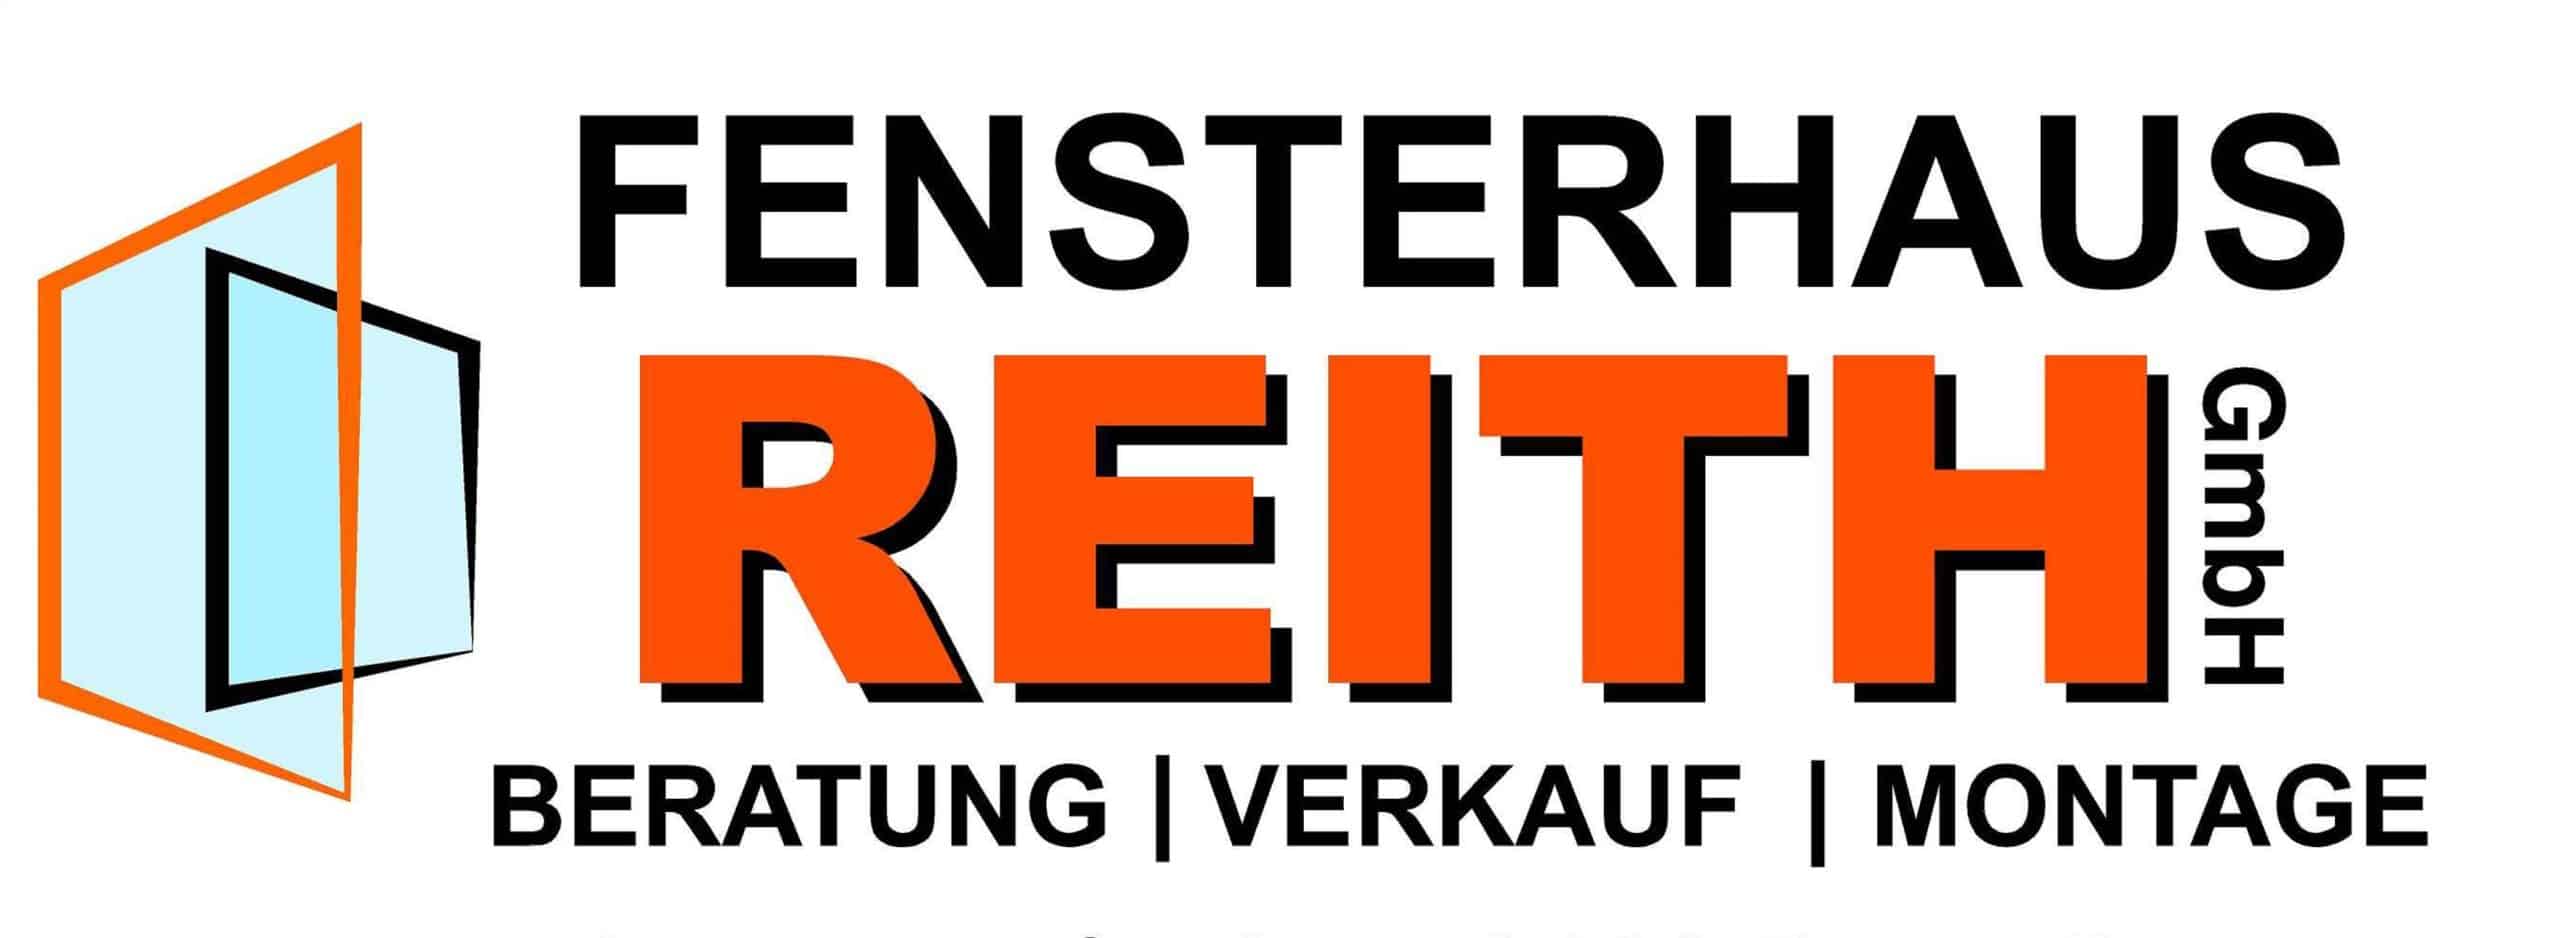 Rensterhaus Reith